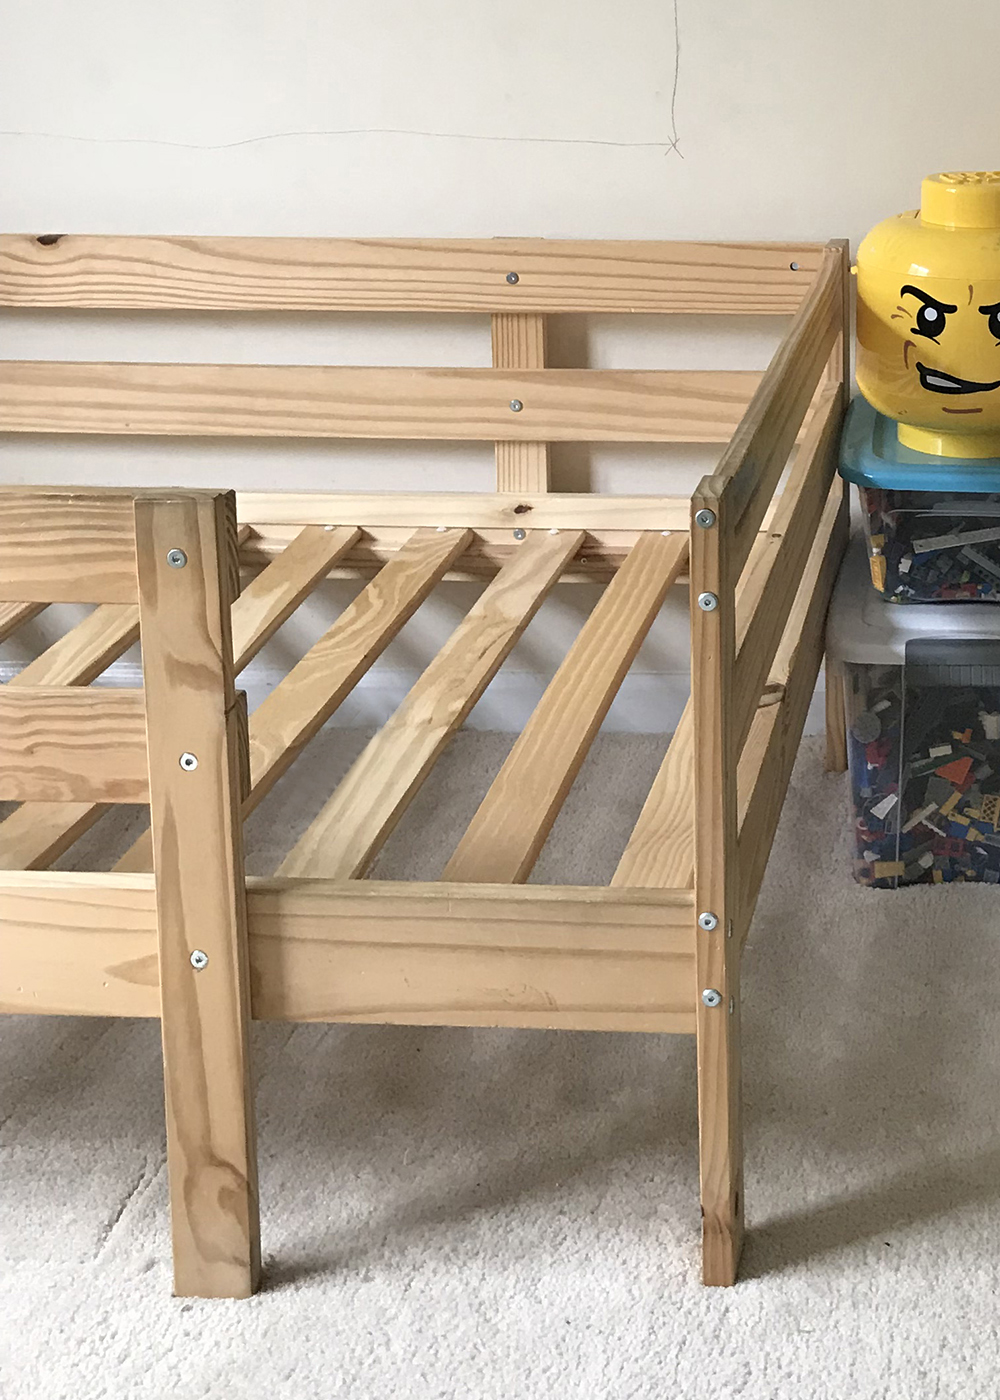 Old IKEA bunk bed frame